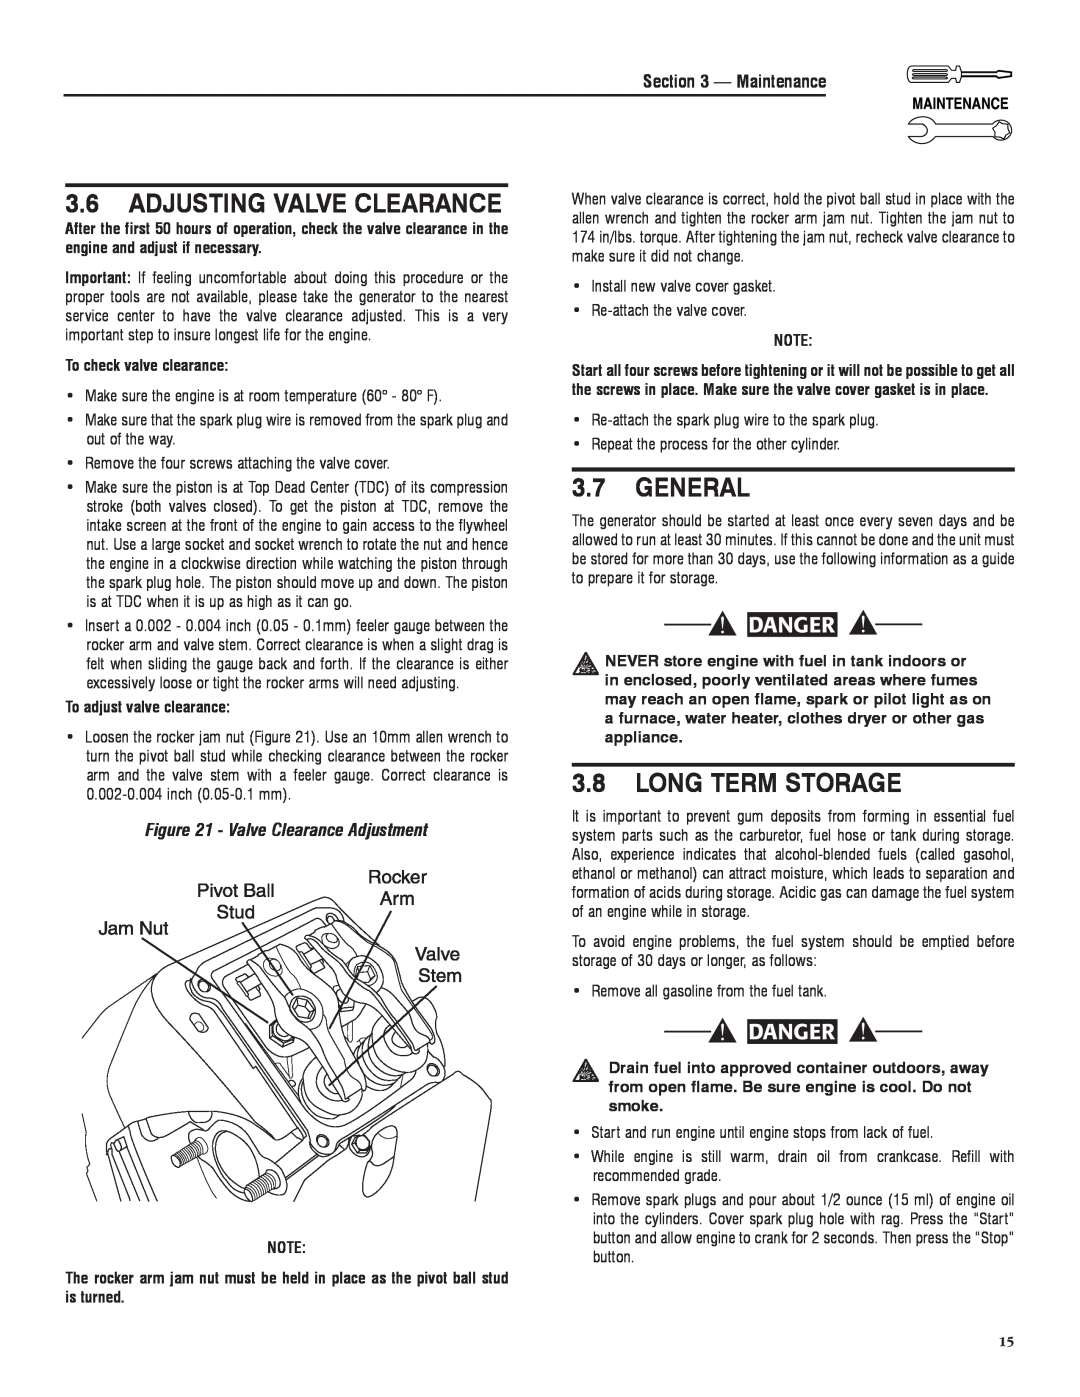 Sears 005734-0 manual General, Long Term Storage, Valve Clearance Adjustment, Adjusting Valve Clearance, Danger, appliance 